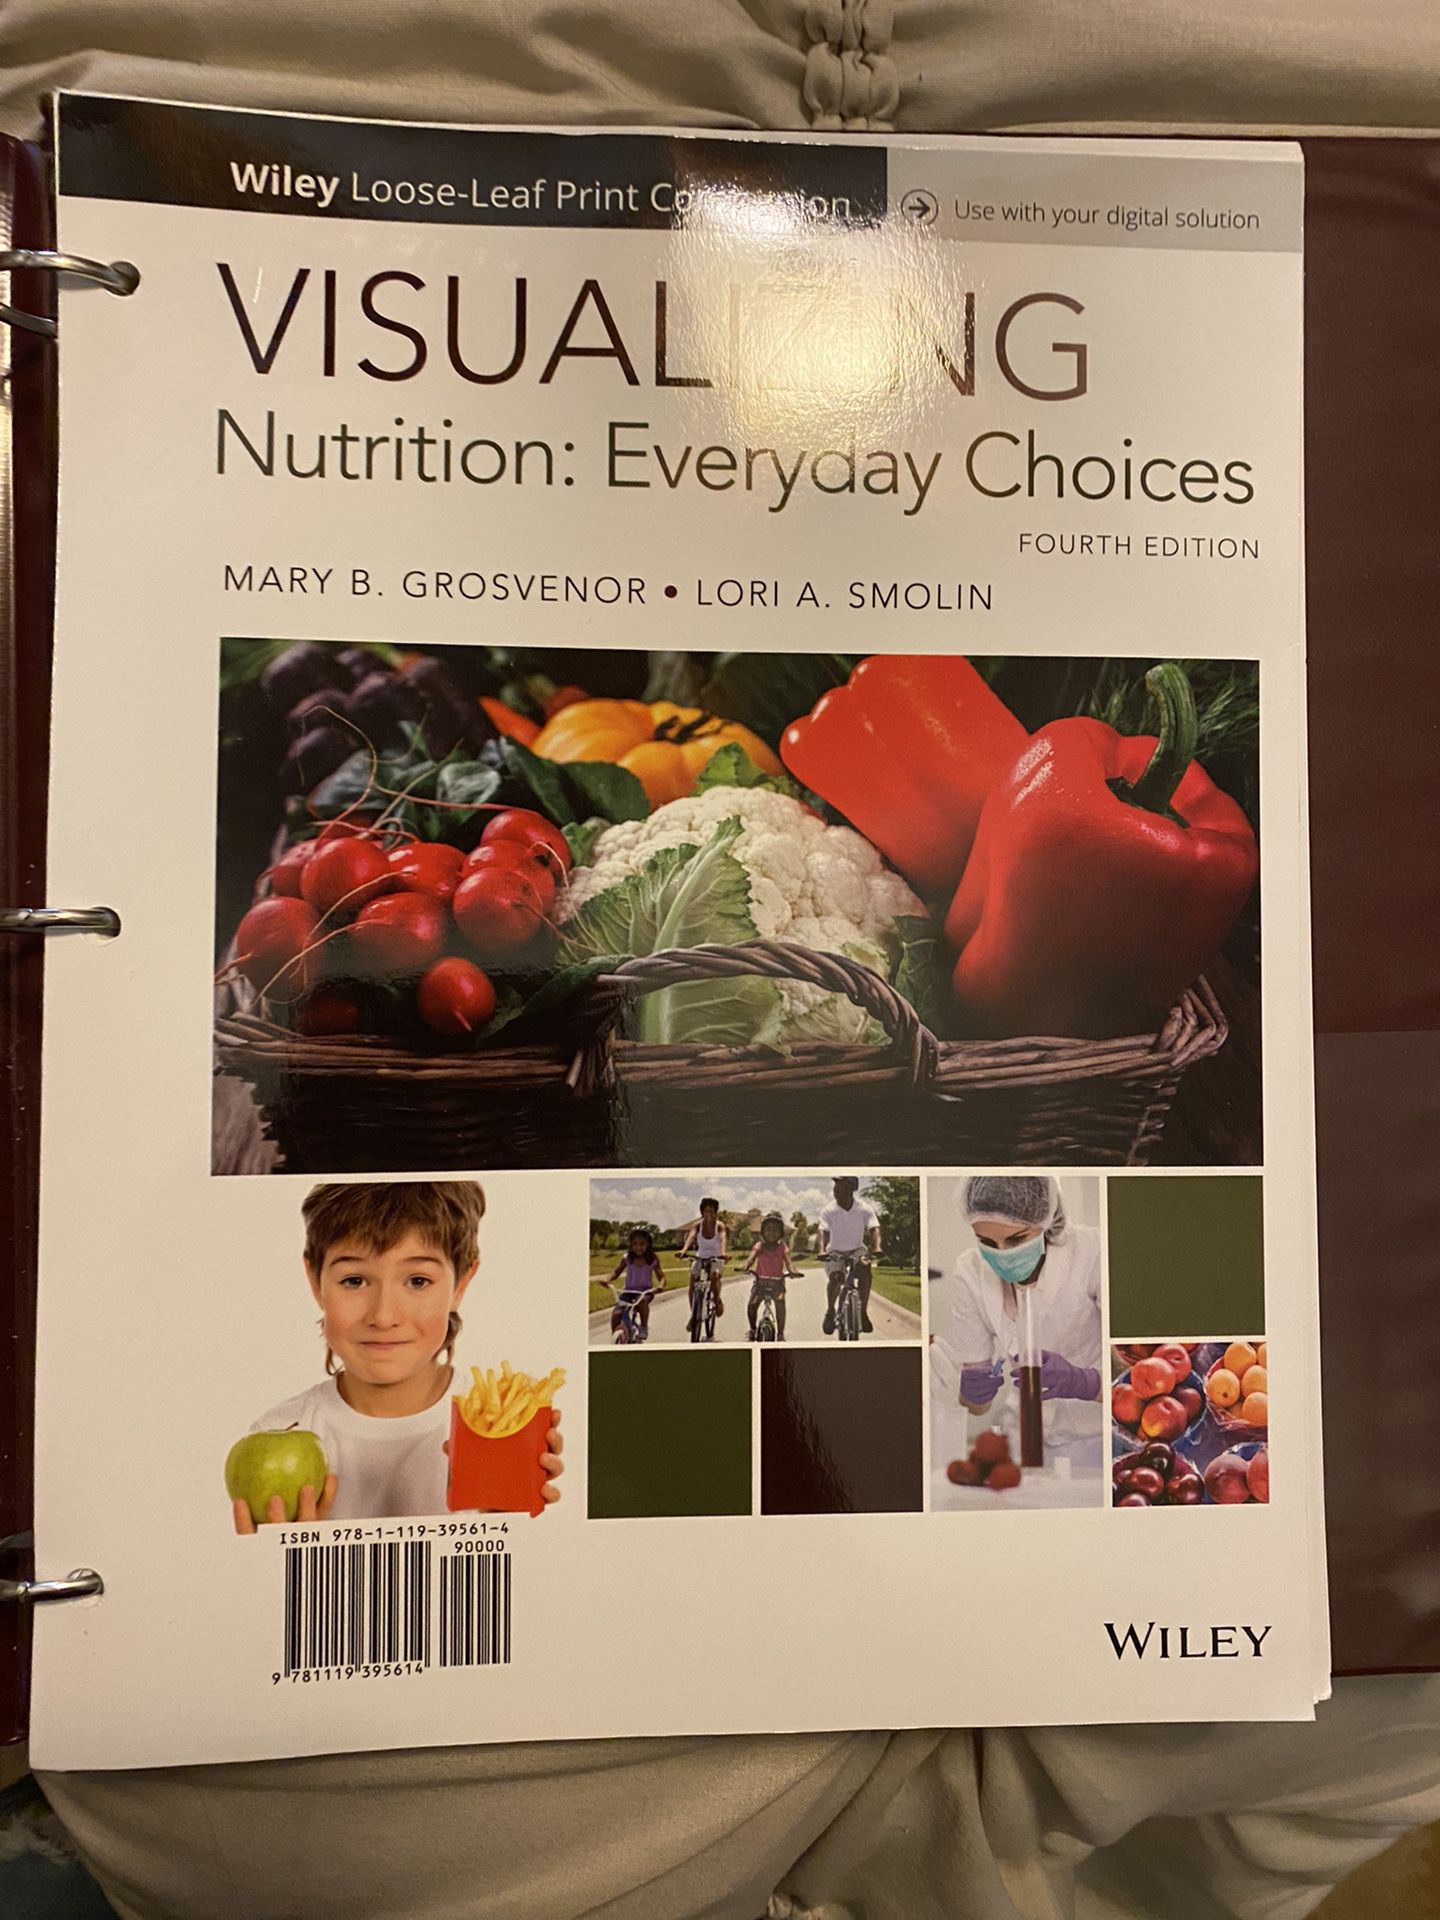 Nutrition book